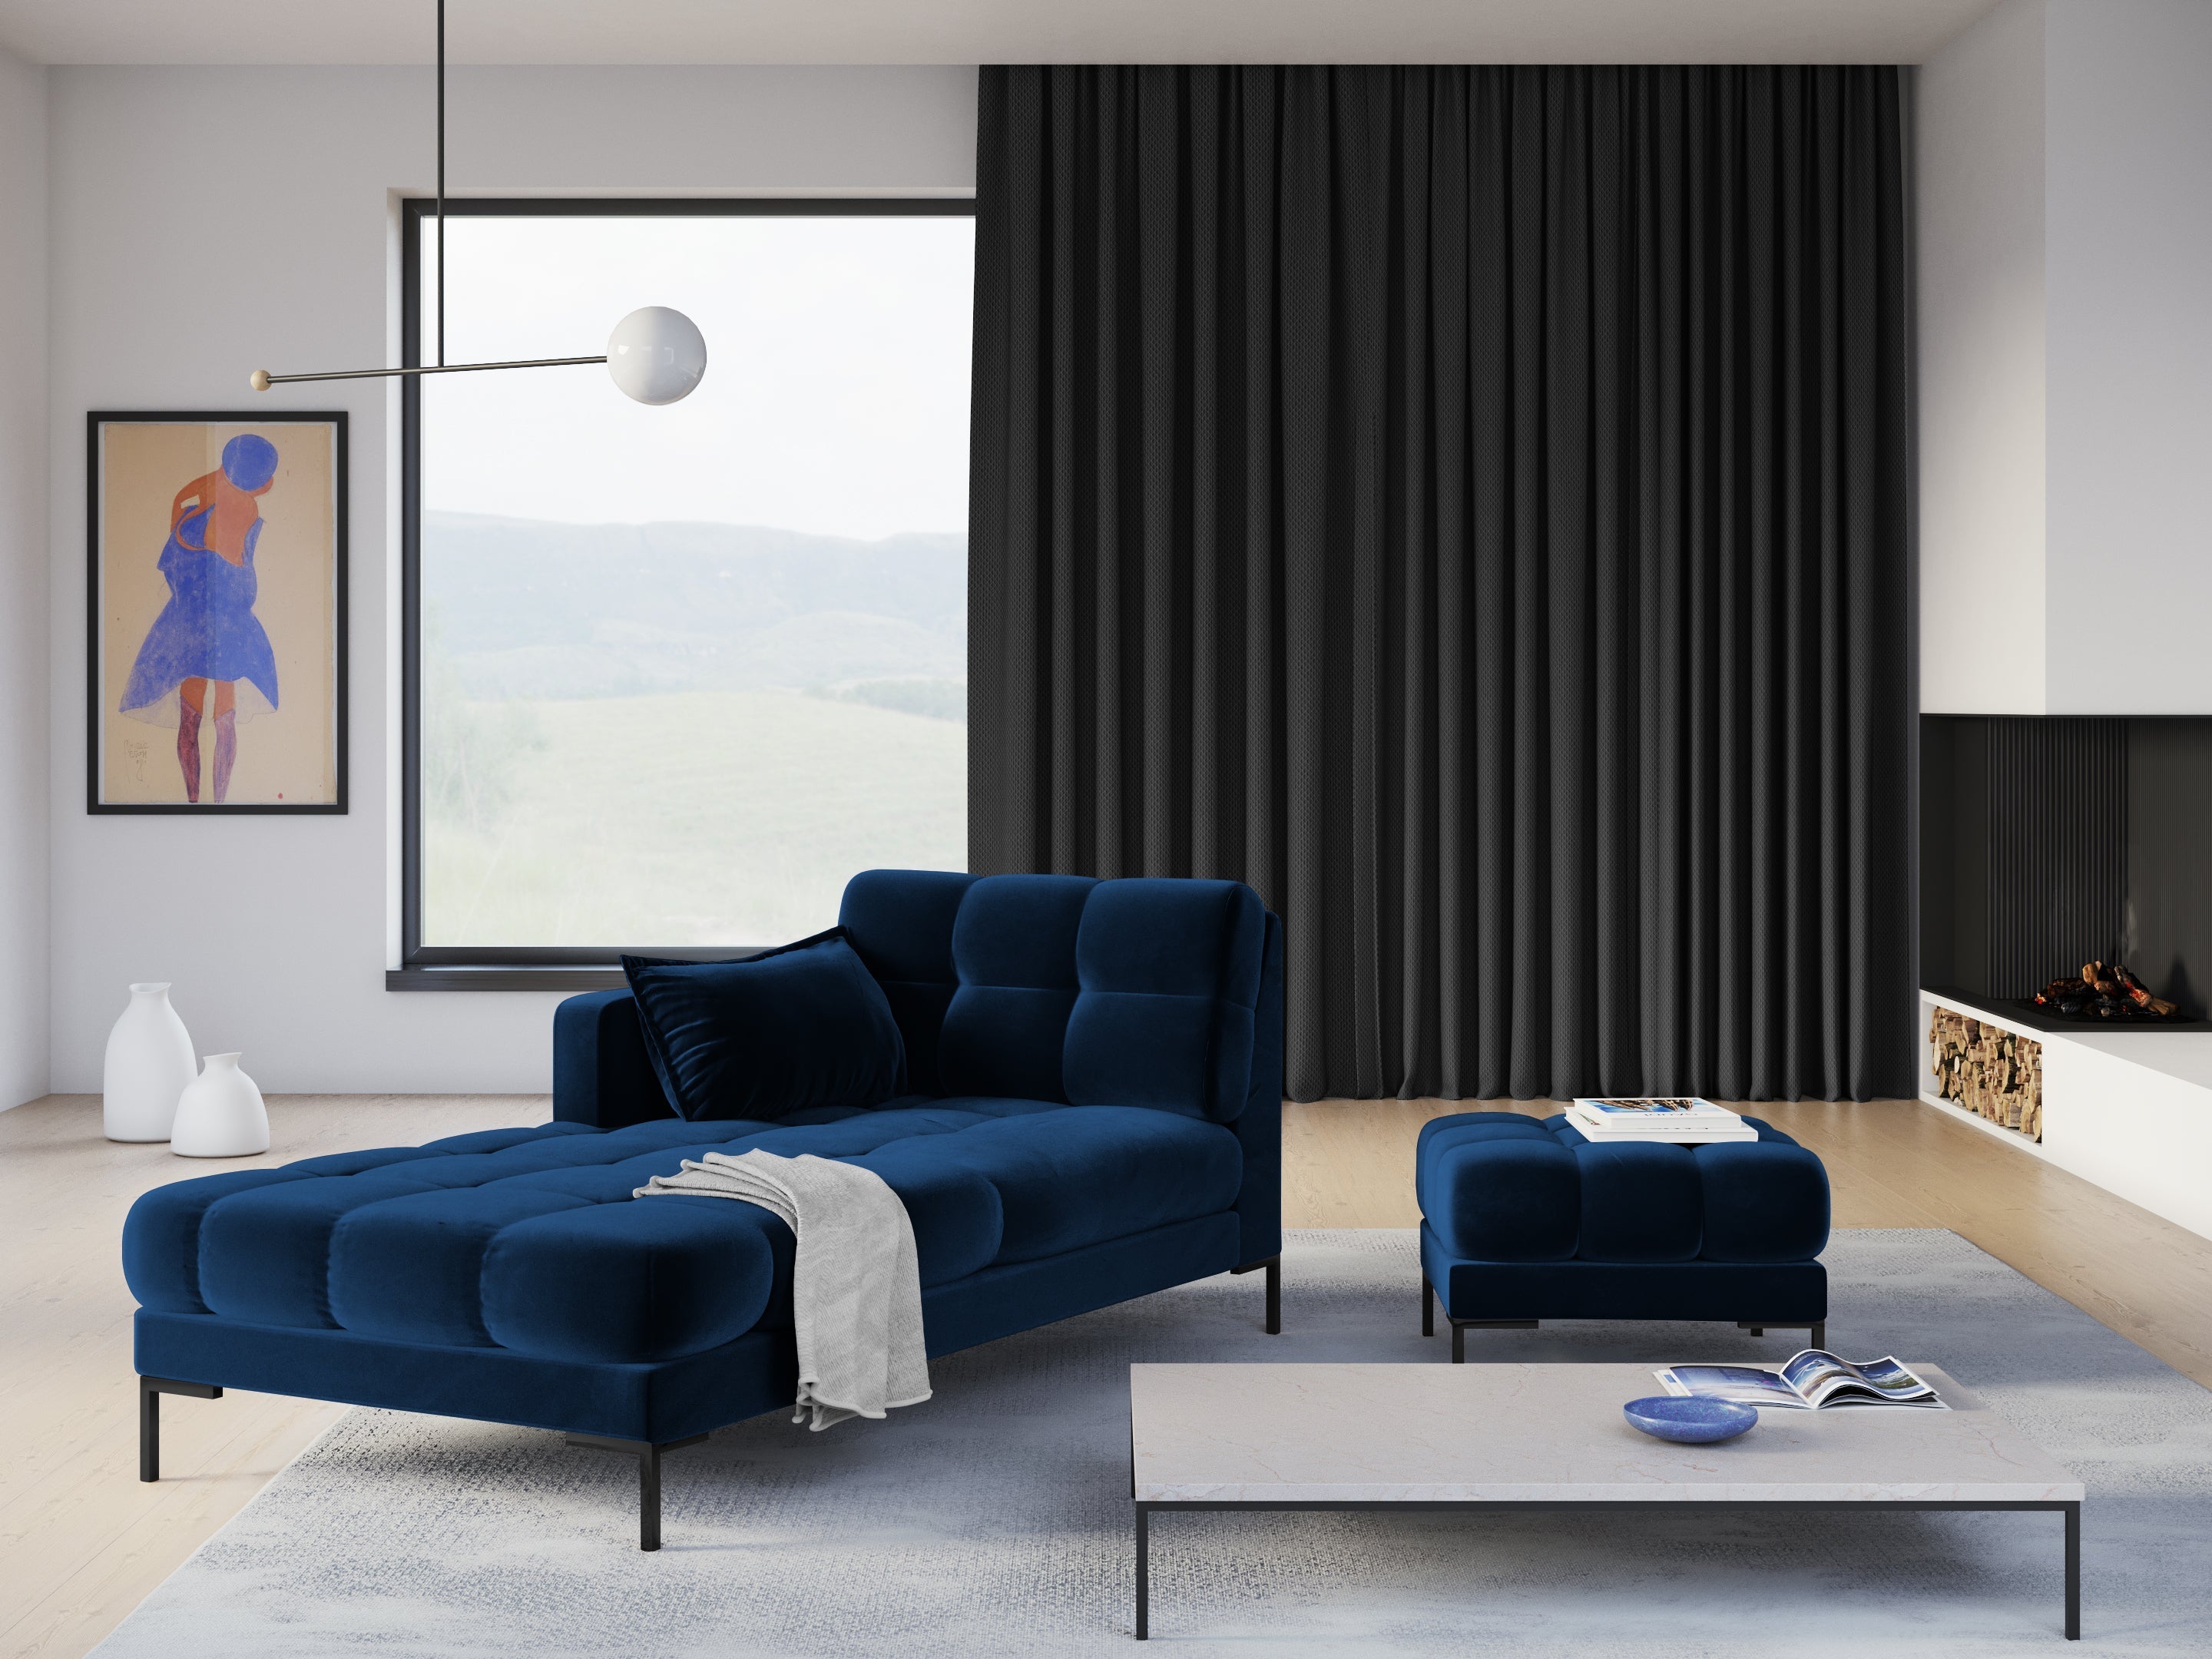 Blue chaiselong for a modern interior